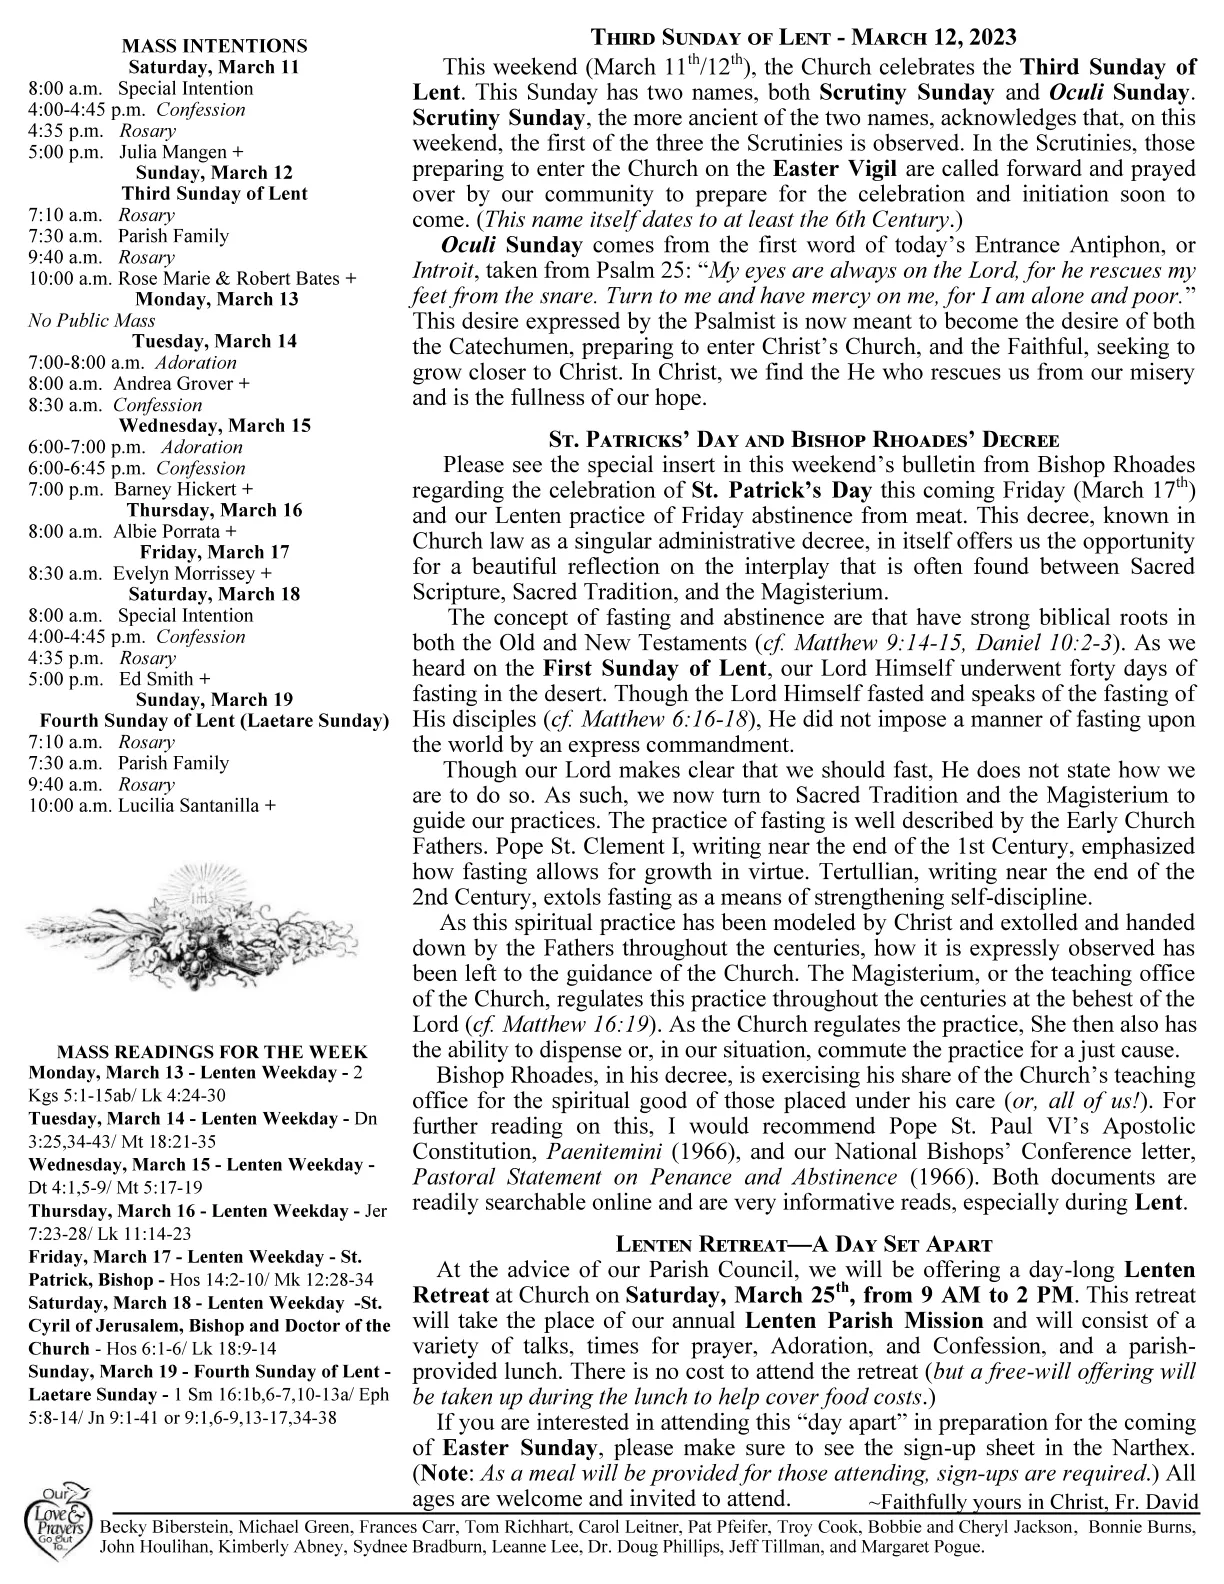 Mar 12, 2023 - Bulletin - Page 2